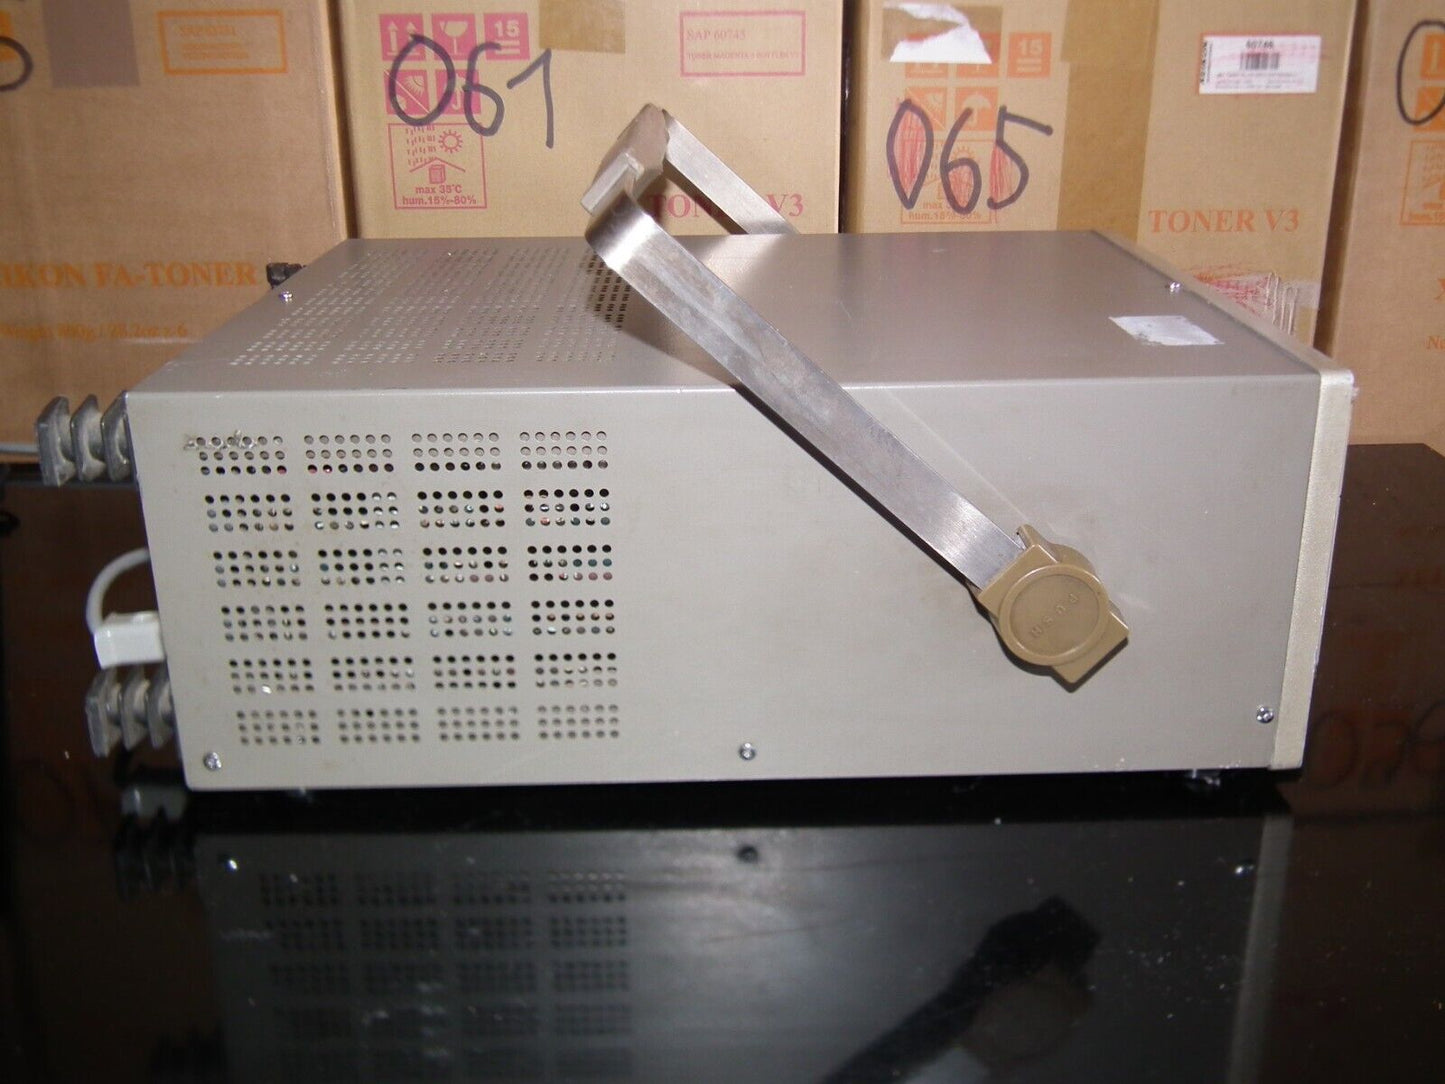 Rohde & Schwarz Oscilloscope TYPE BOL.374.2000.02 100 MHz